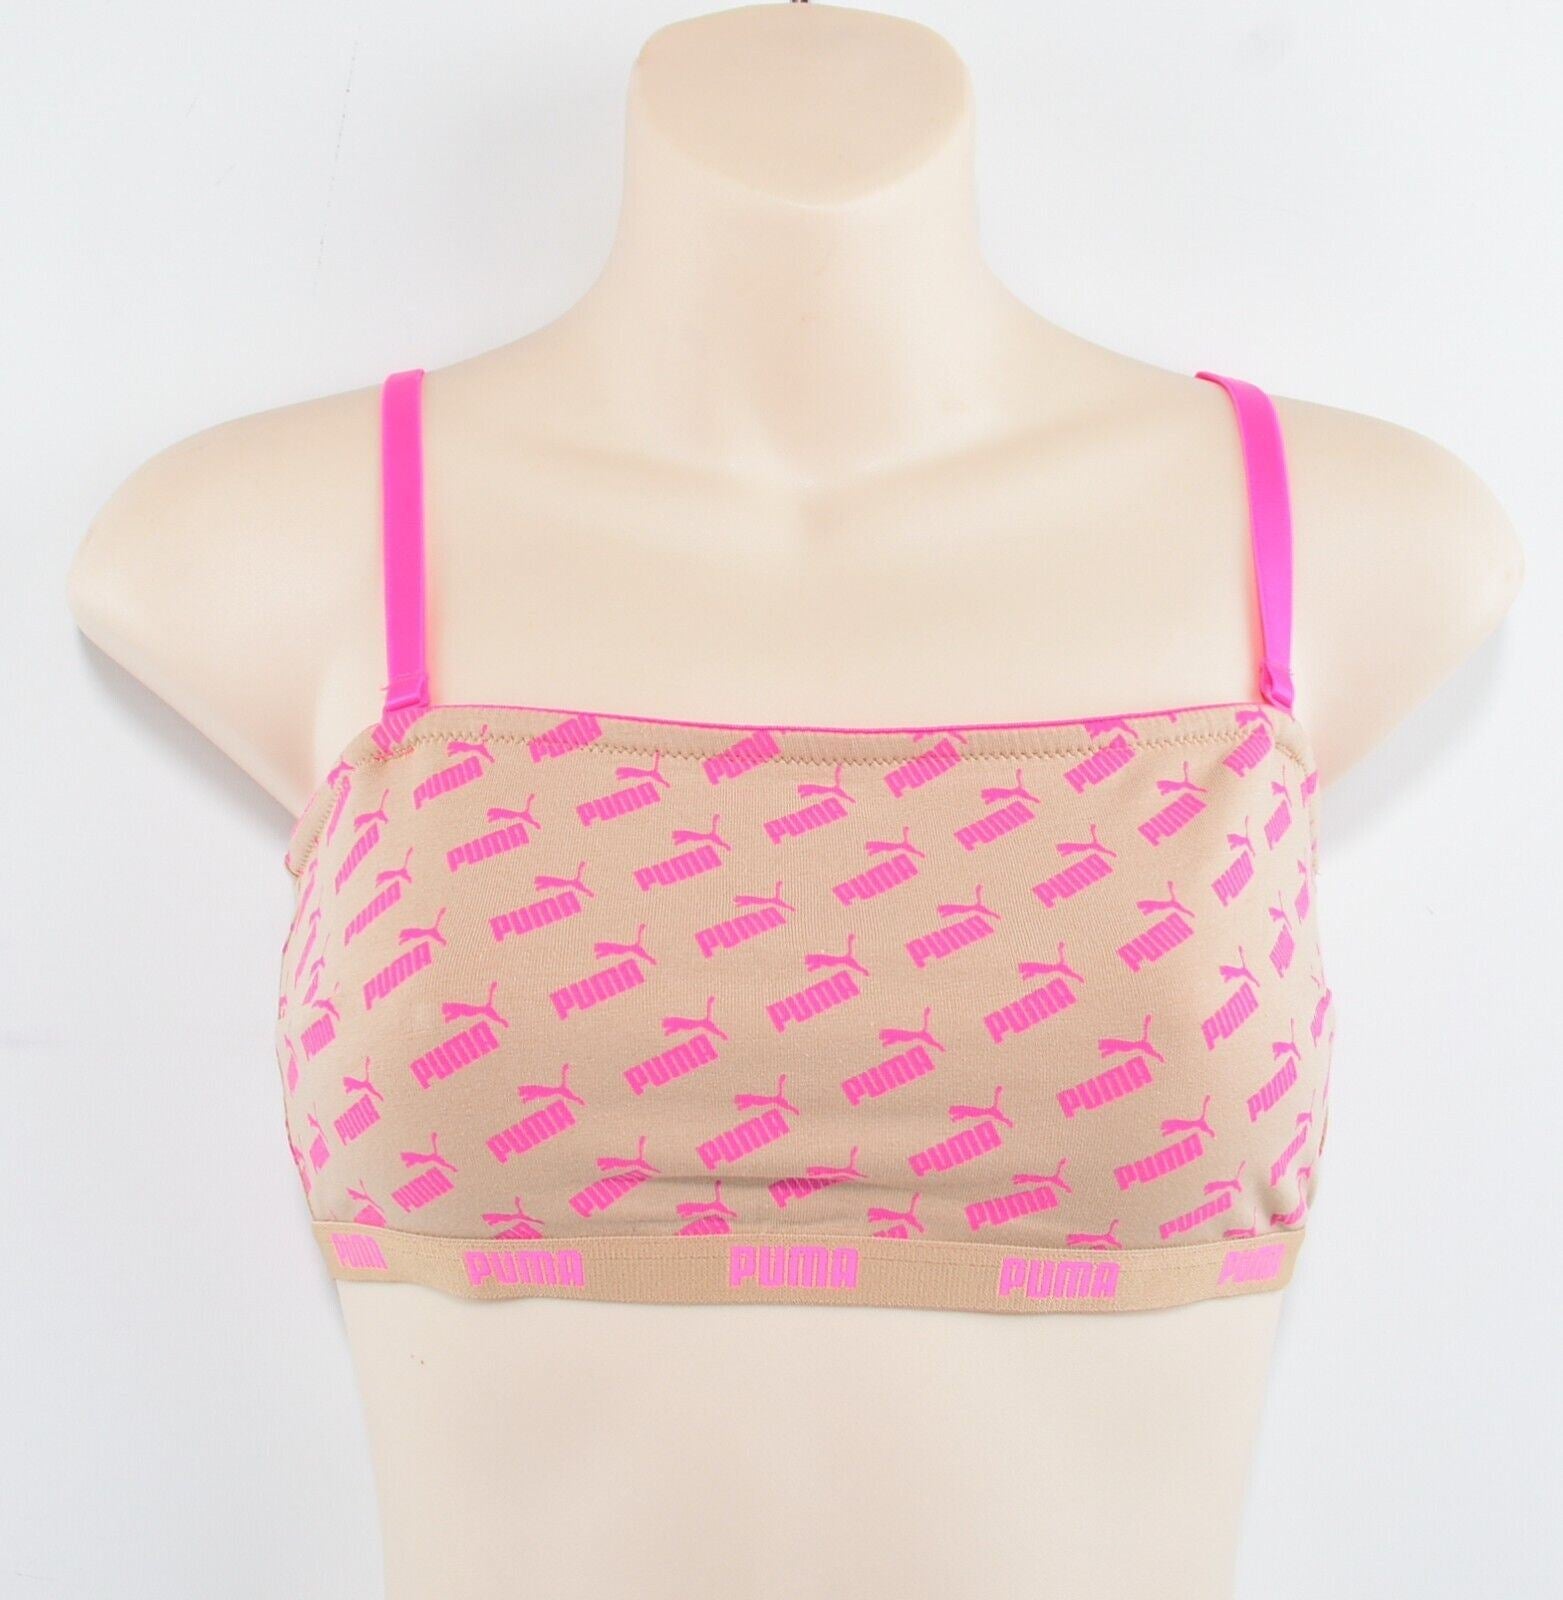 PUMA Women's Cotton Stretch BANDEAU TOP, Logo Print, Nude/Pink, size M